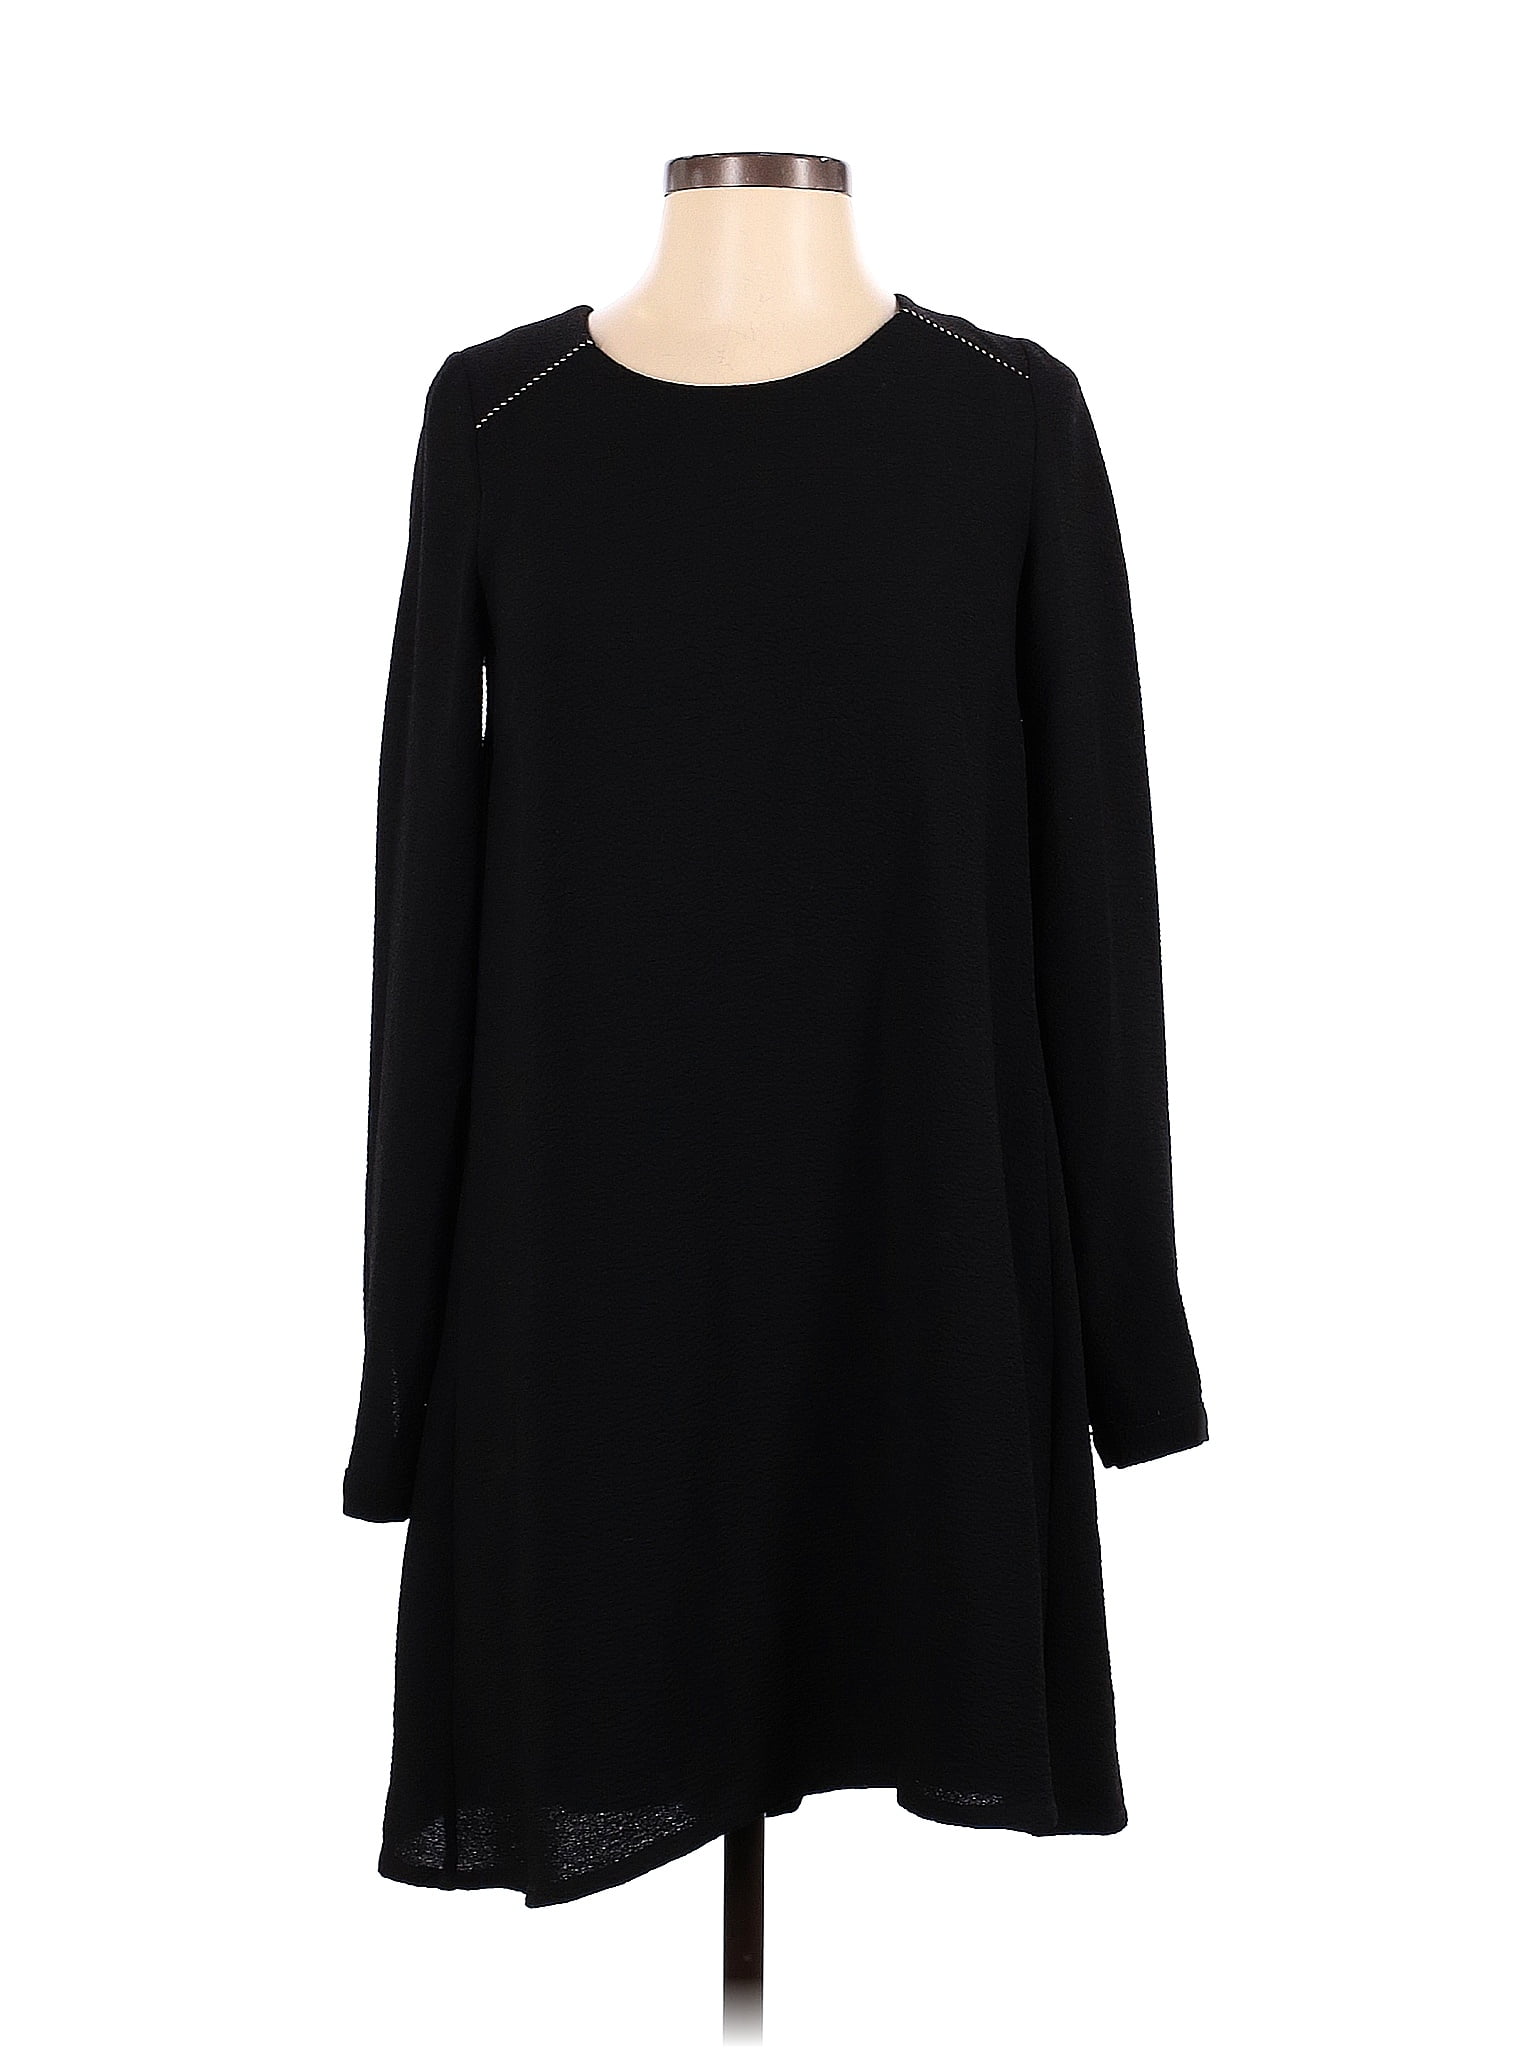 Sézane Black Casual Dress Size 34 (EU) - 67% off | thredUP